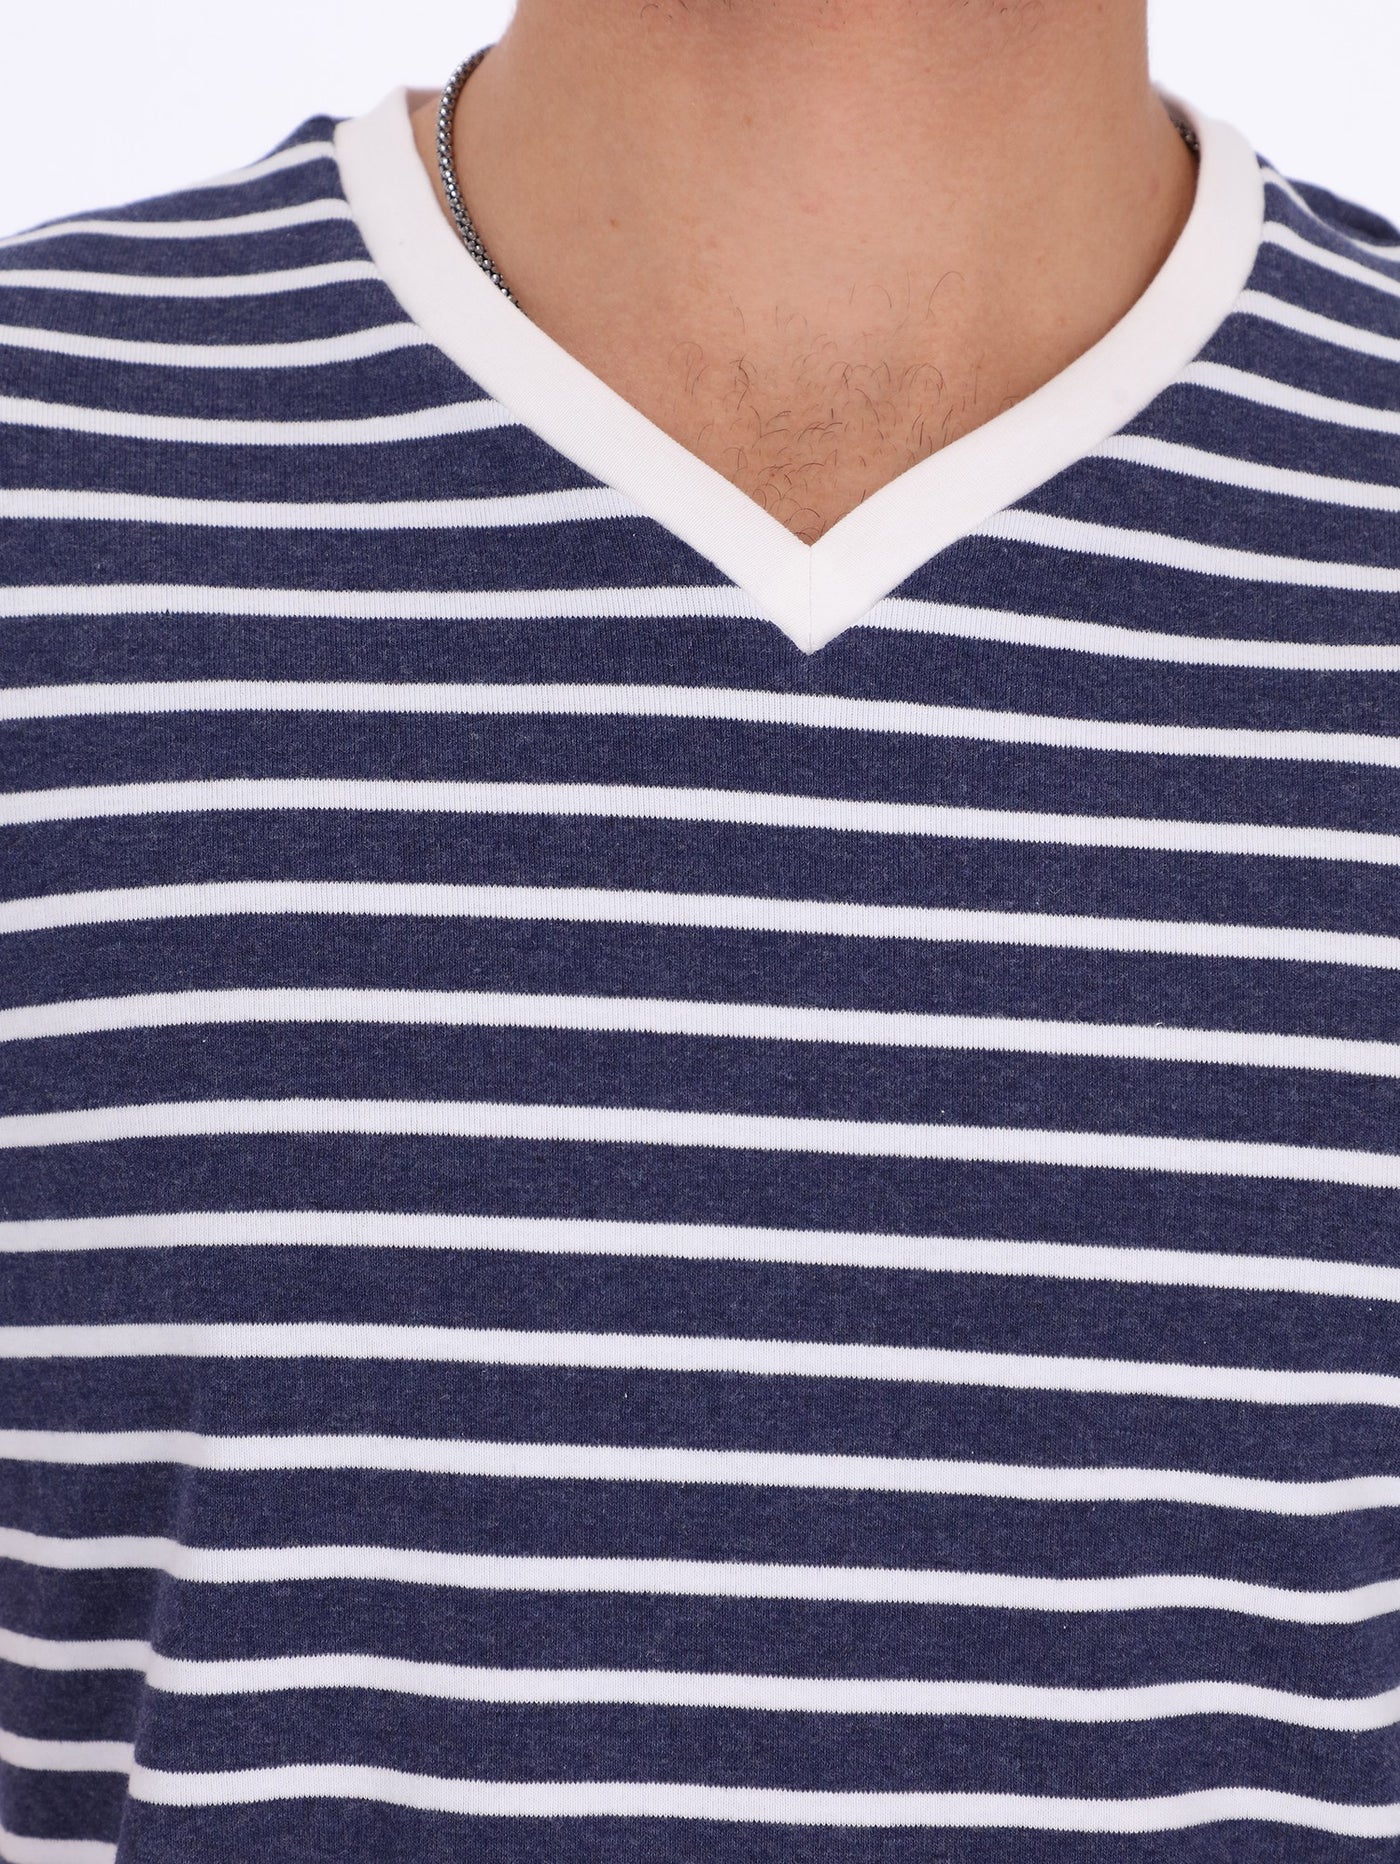 O'Zone Men's Horizontal Striped T-Shirt